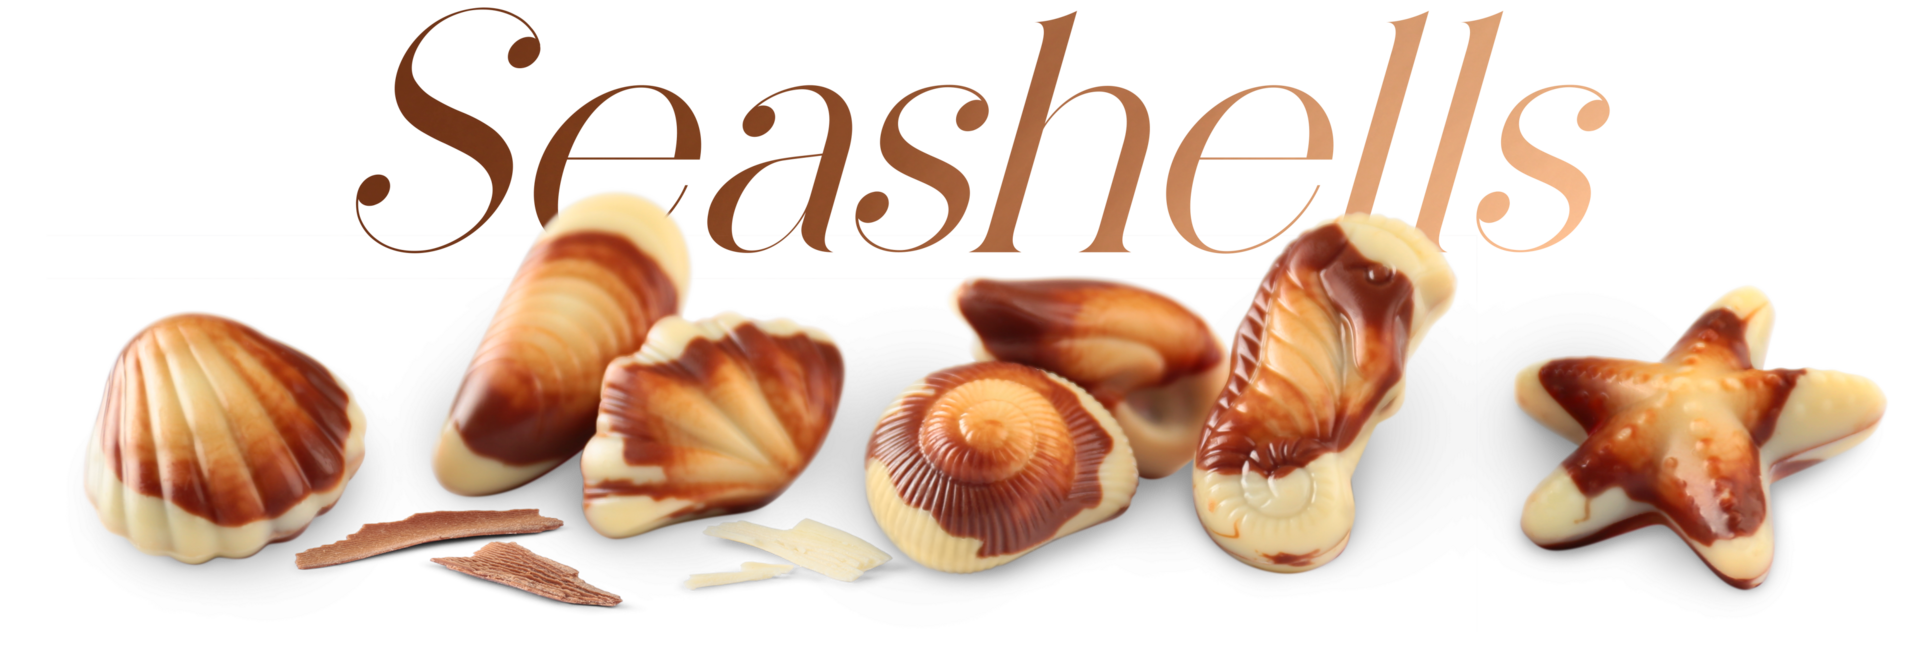 LIMAR_All Year_sfeer sea shells+text